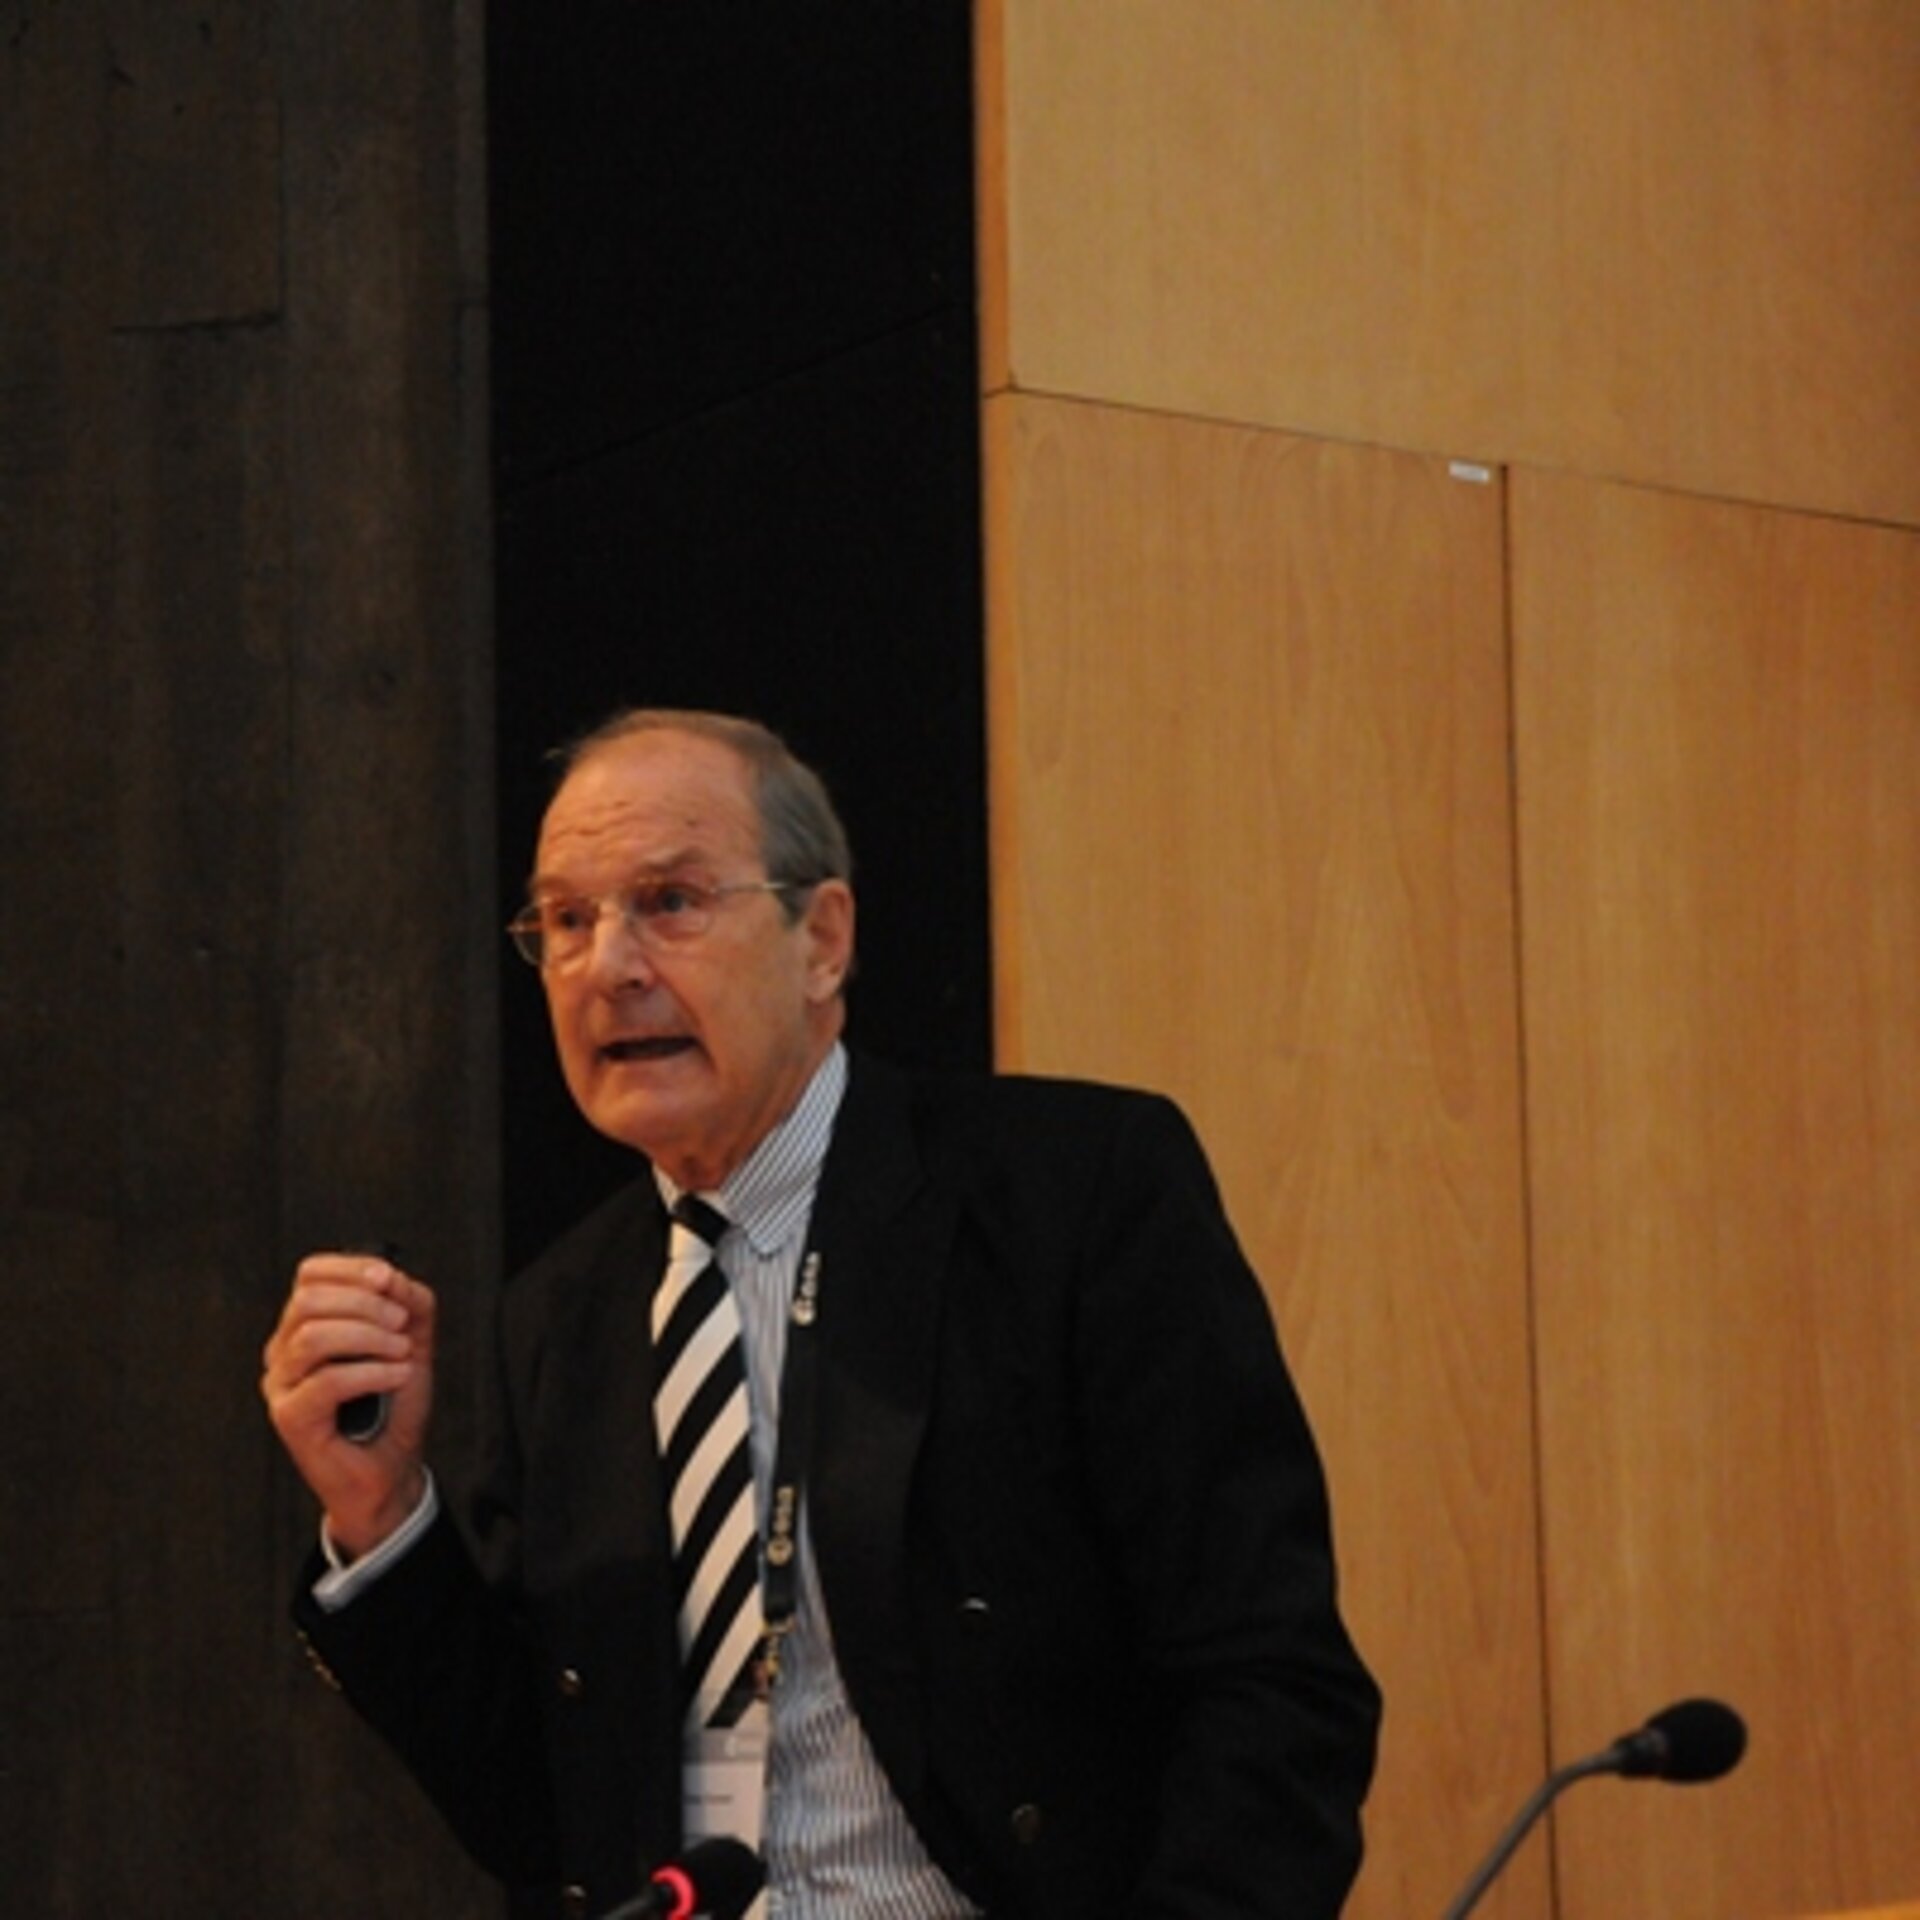 Professor Heinz Stoewer addresses the workshop